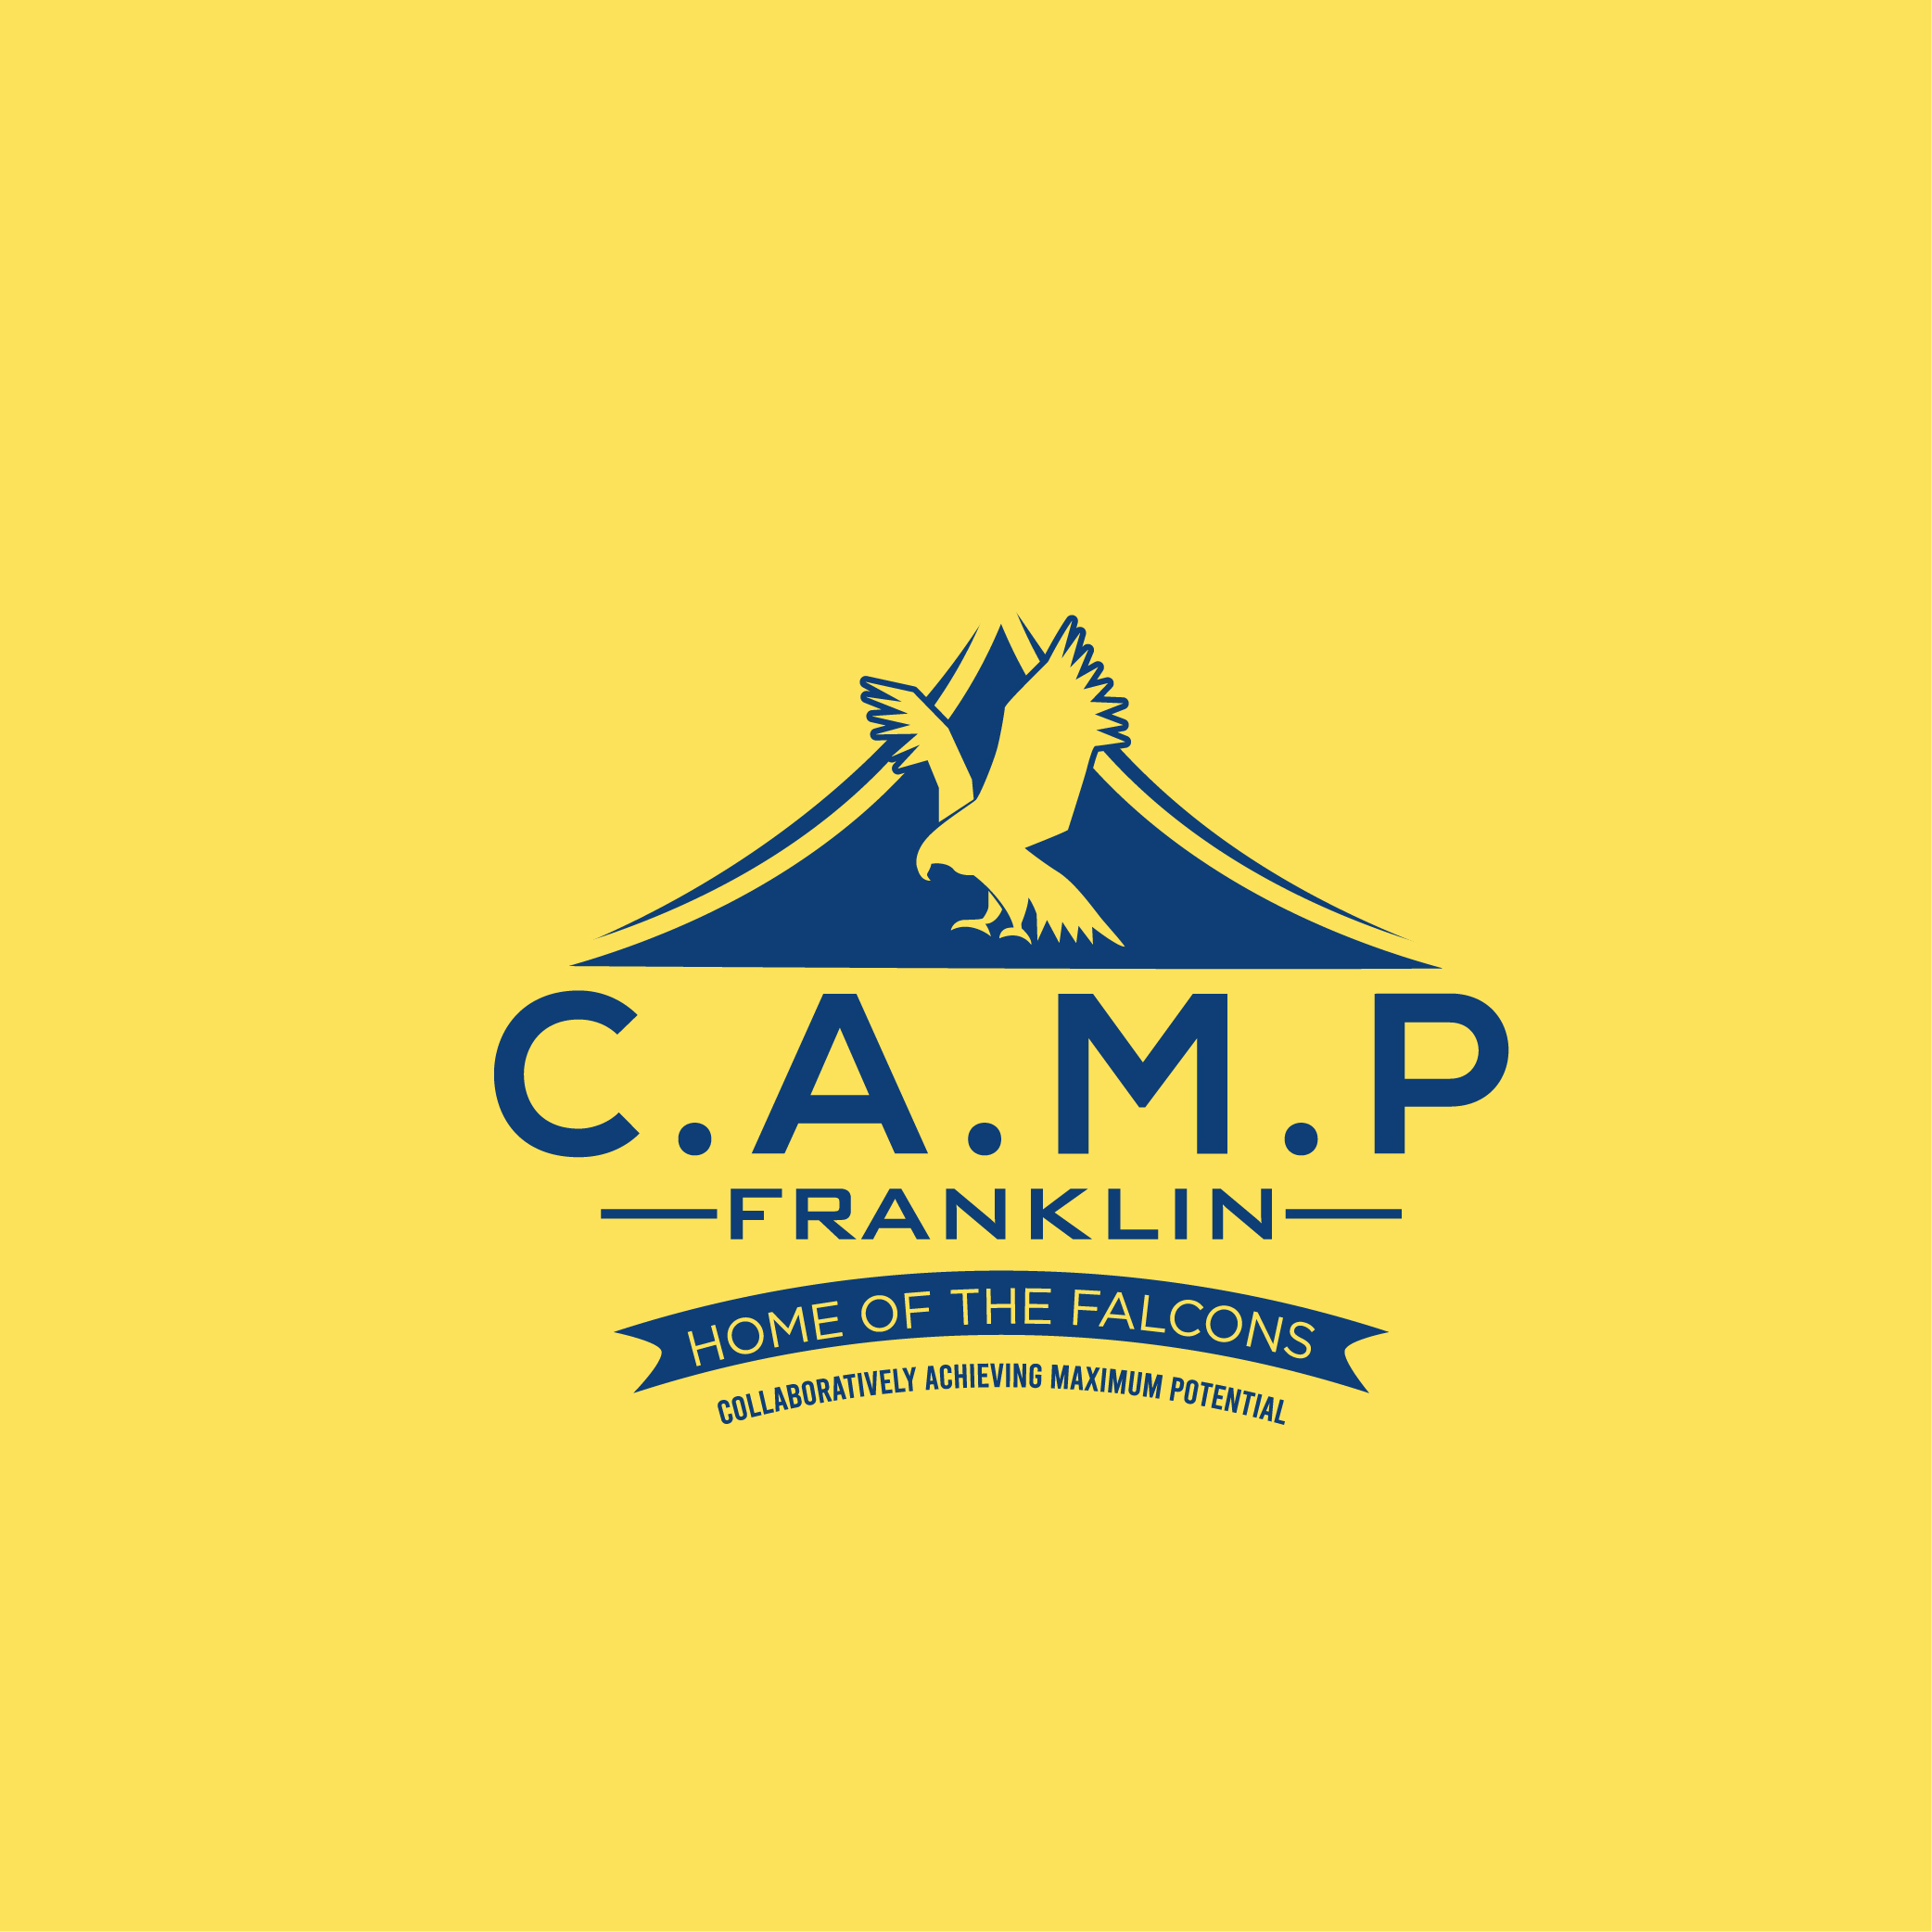 CAMP FRanklin